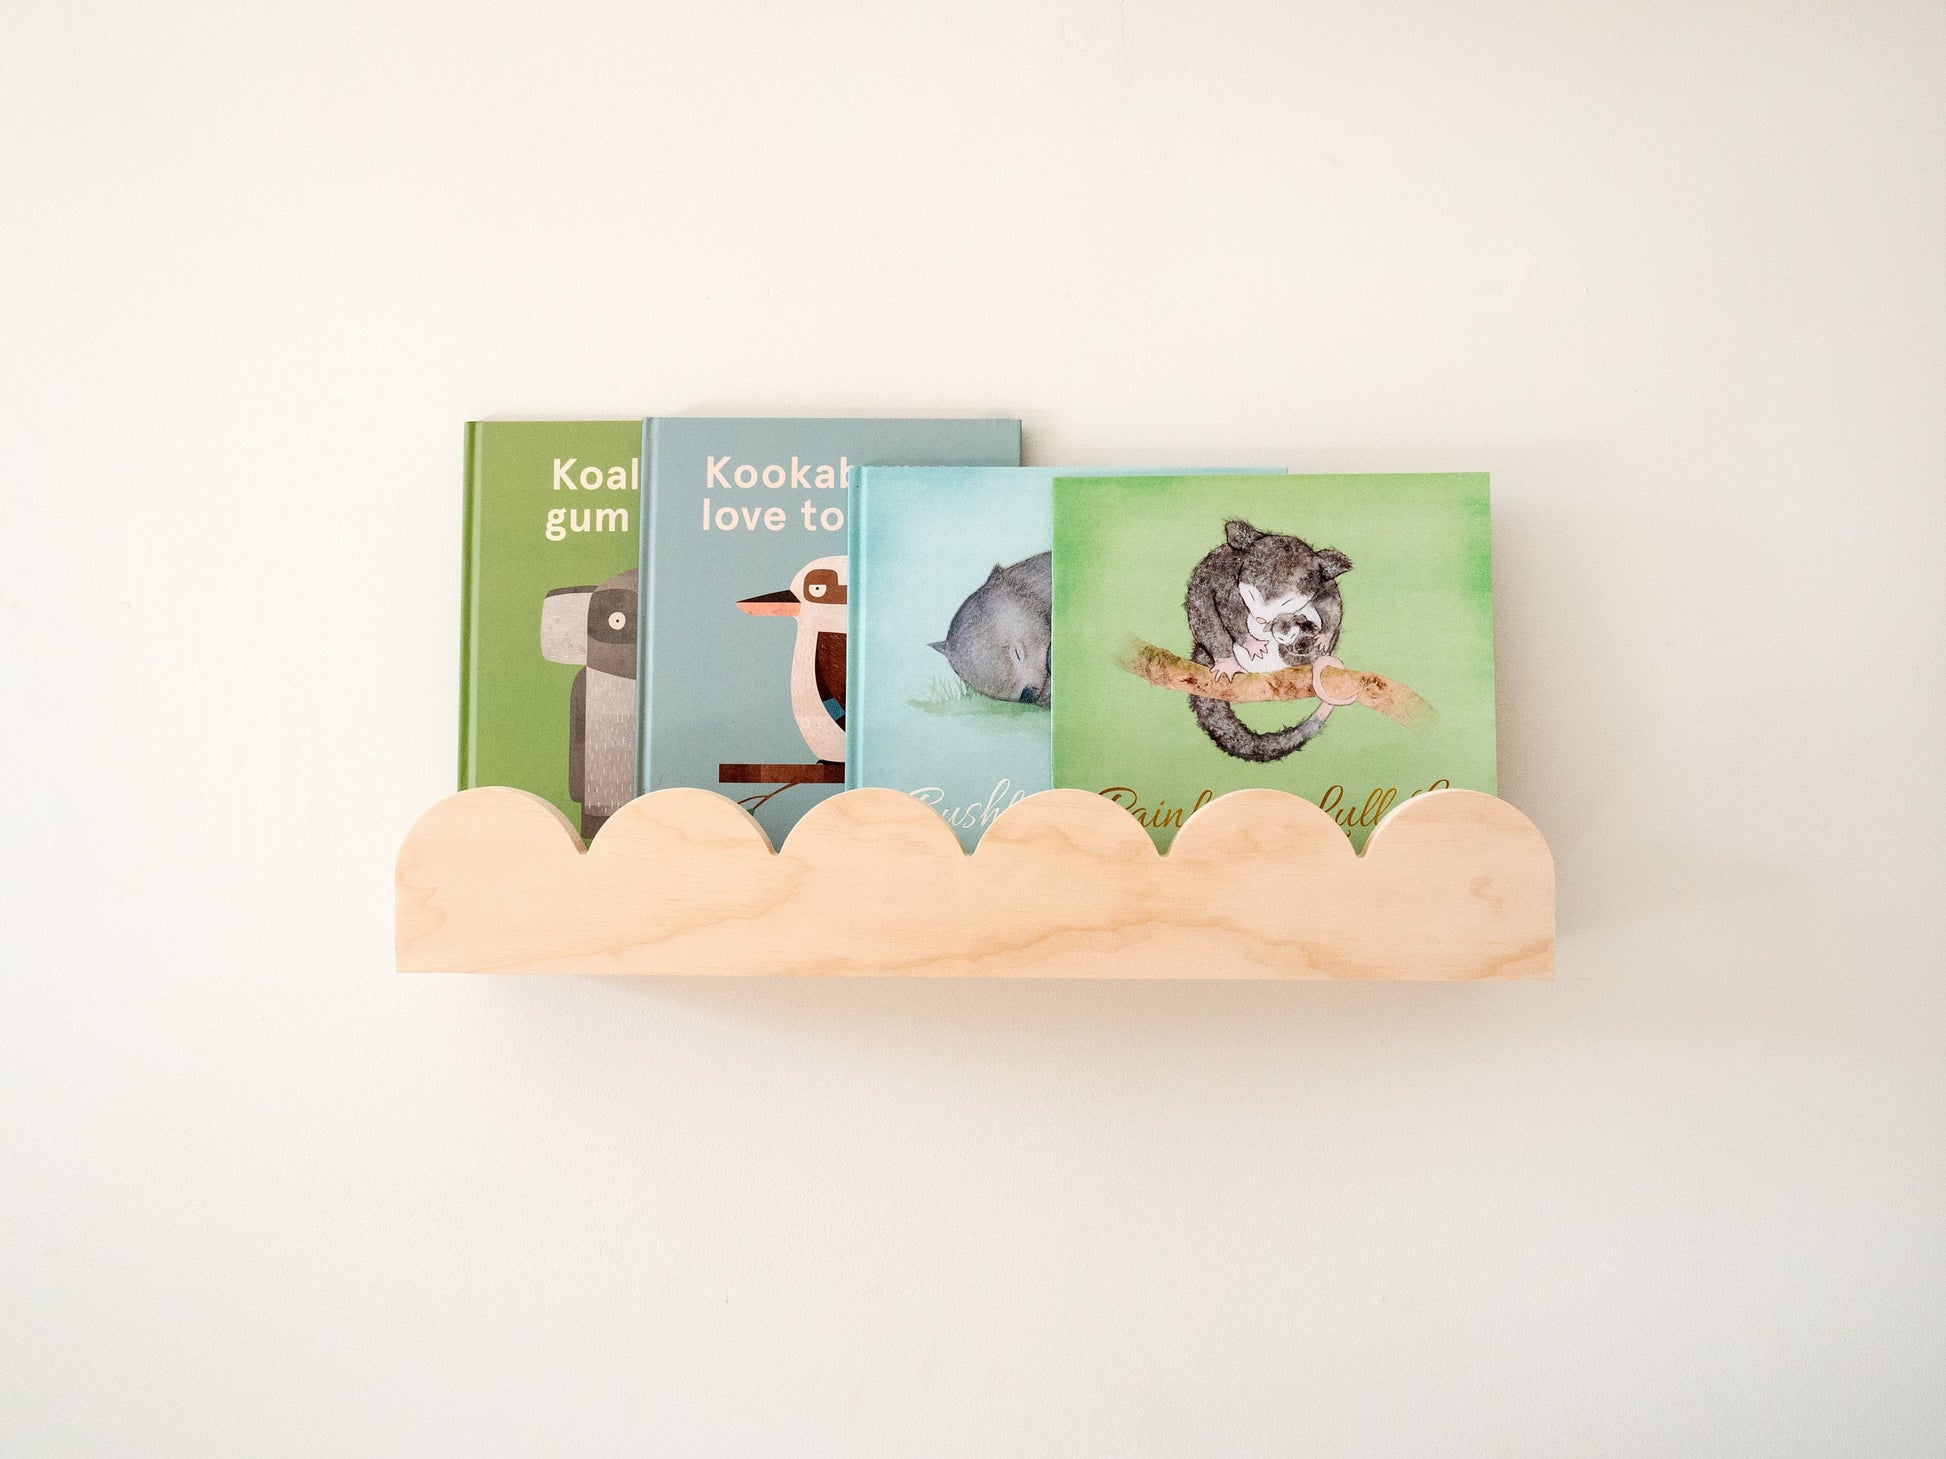 Scalloped Shelf (solid wood) - Arch wall Shelf, Scallop Pattern shelf, Scallop Bookshelf, Book Shelves, Nursery Shelves, Floating bookshelf